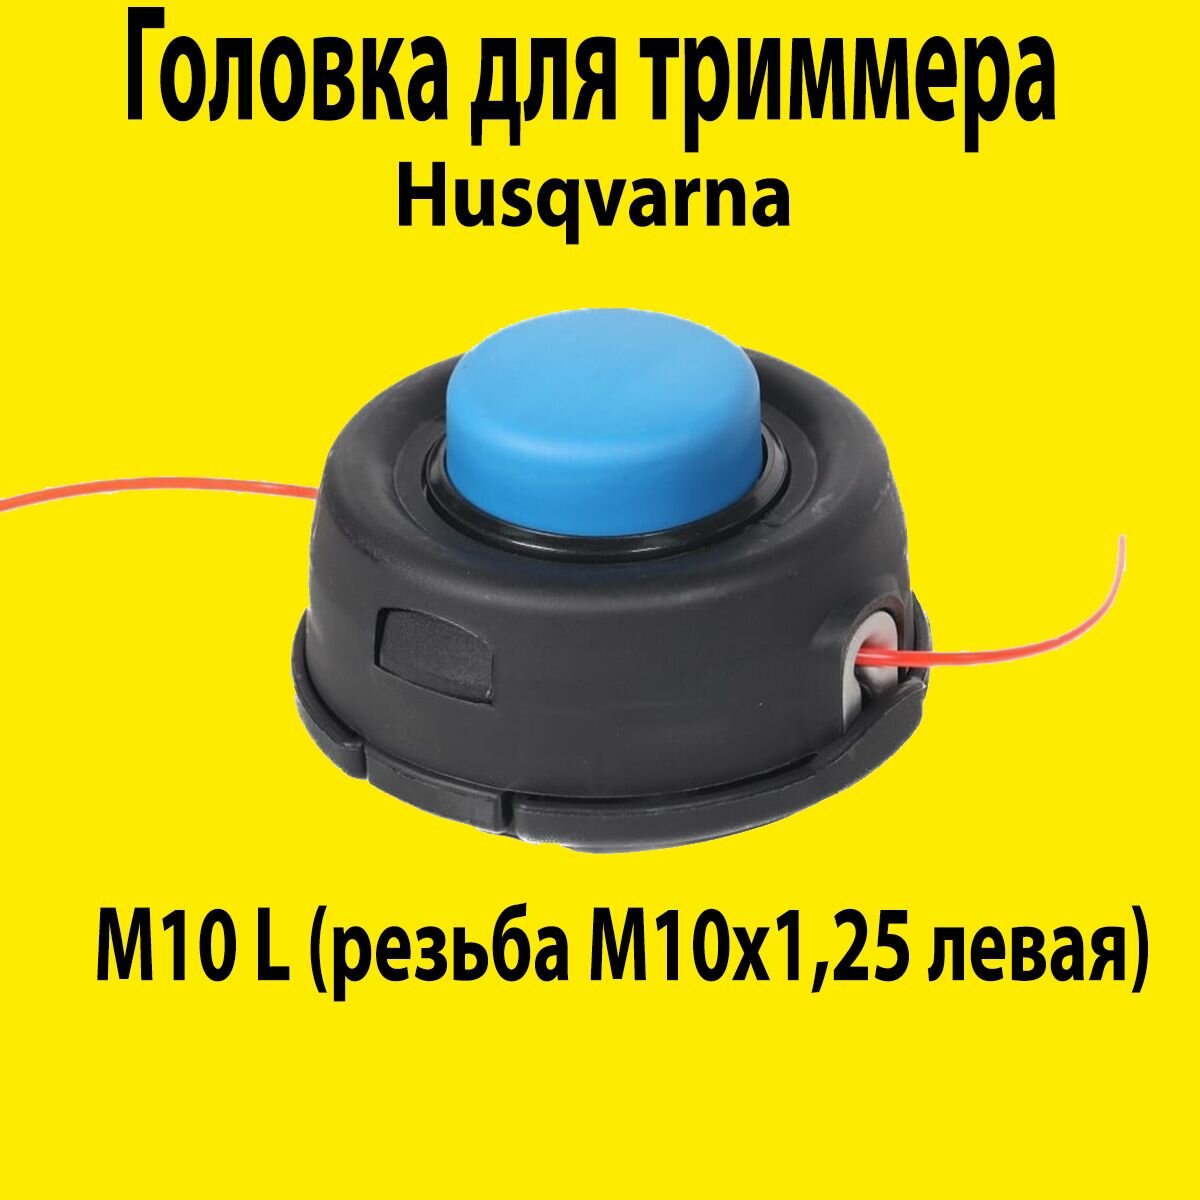 Катушка с леской (шпуля) для бензокосы (триммера) Аналог HUSQVARNA T35 M10х125 левая резьба